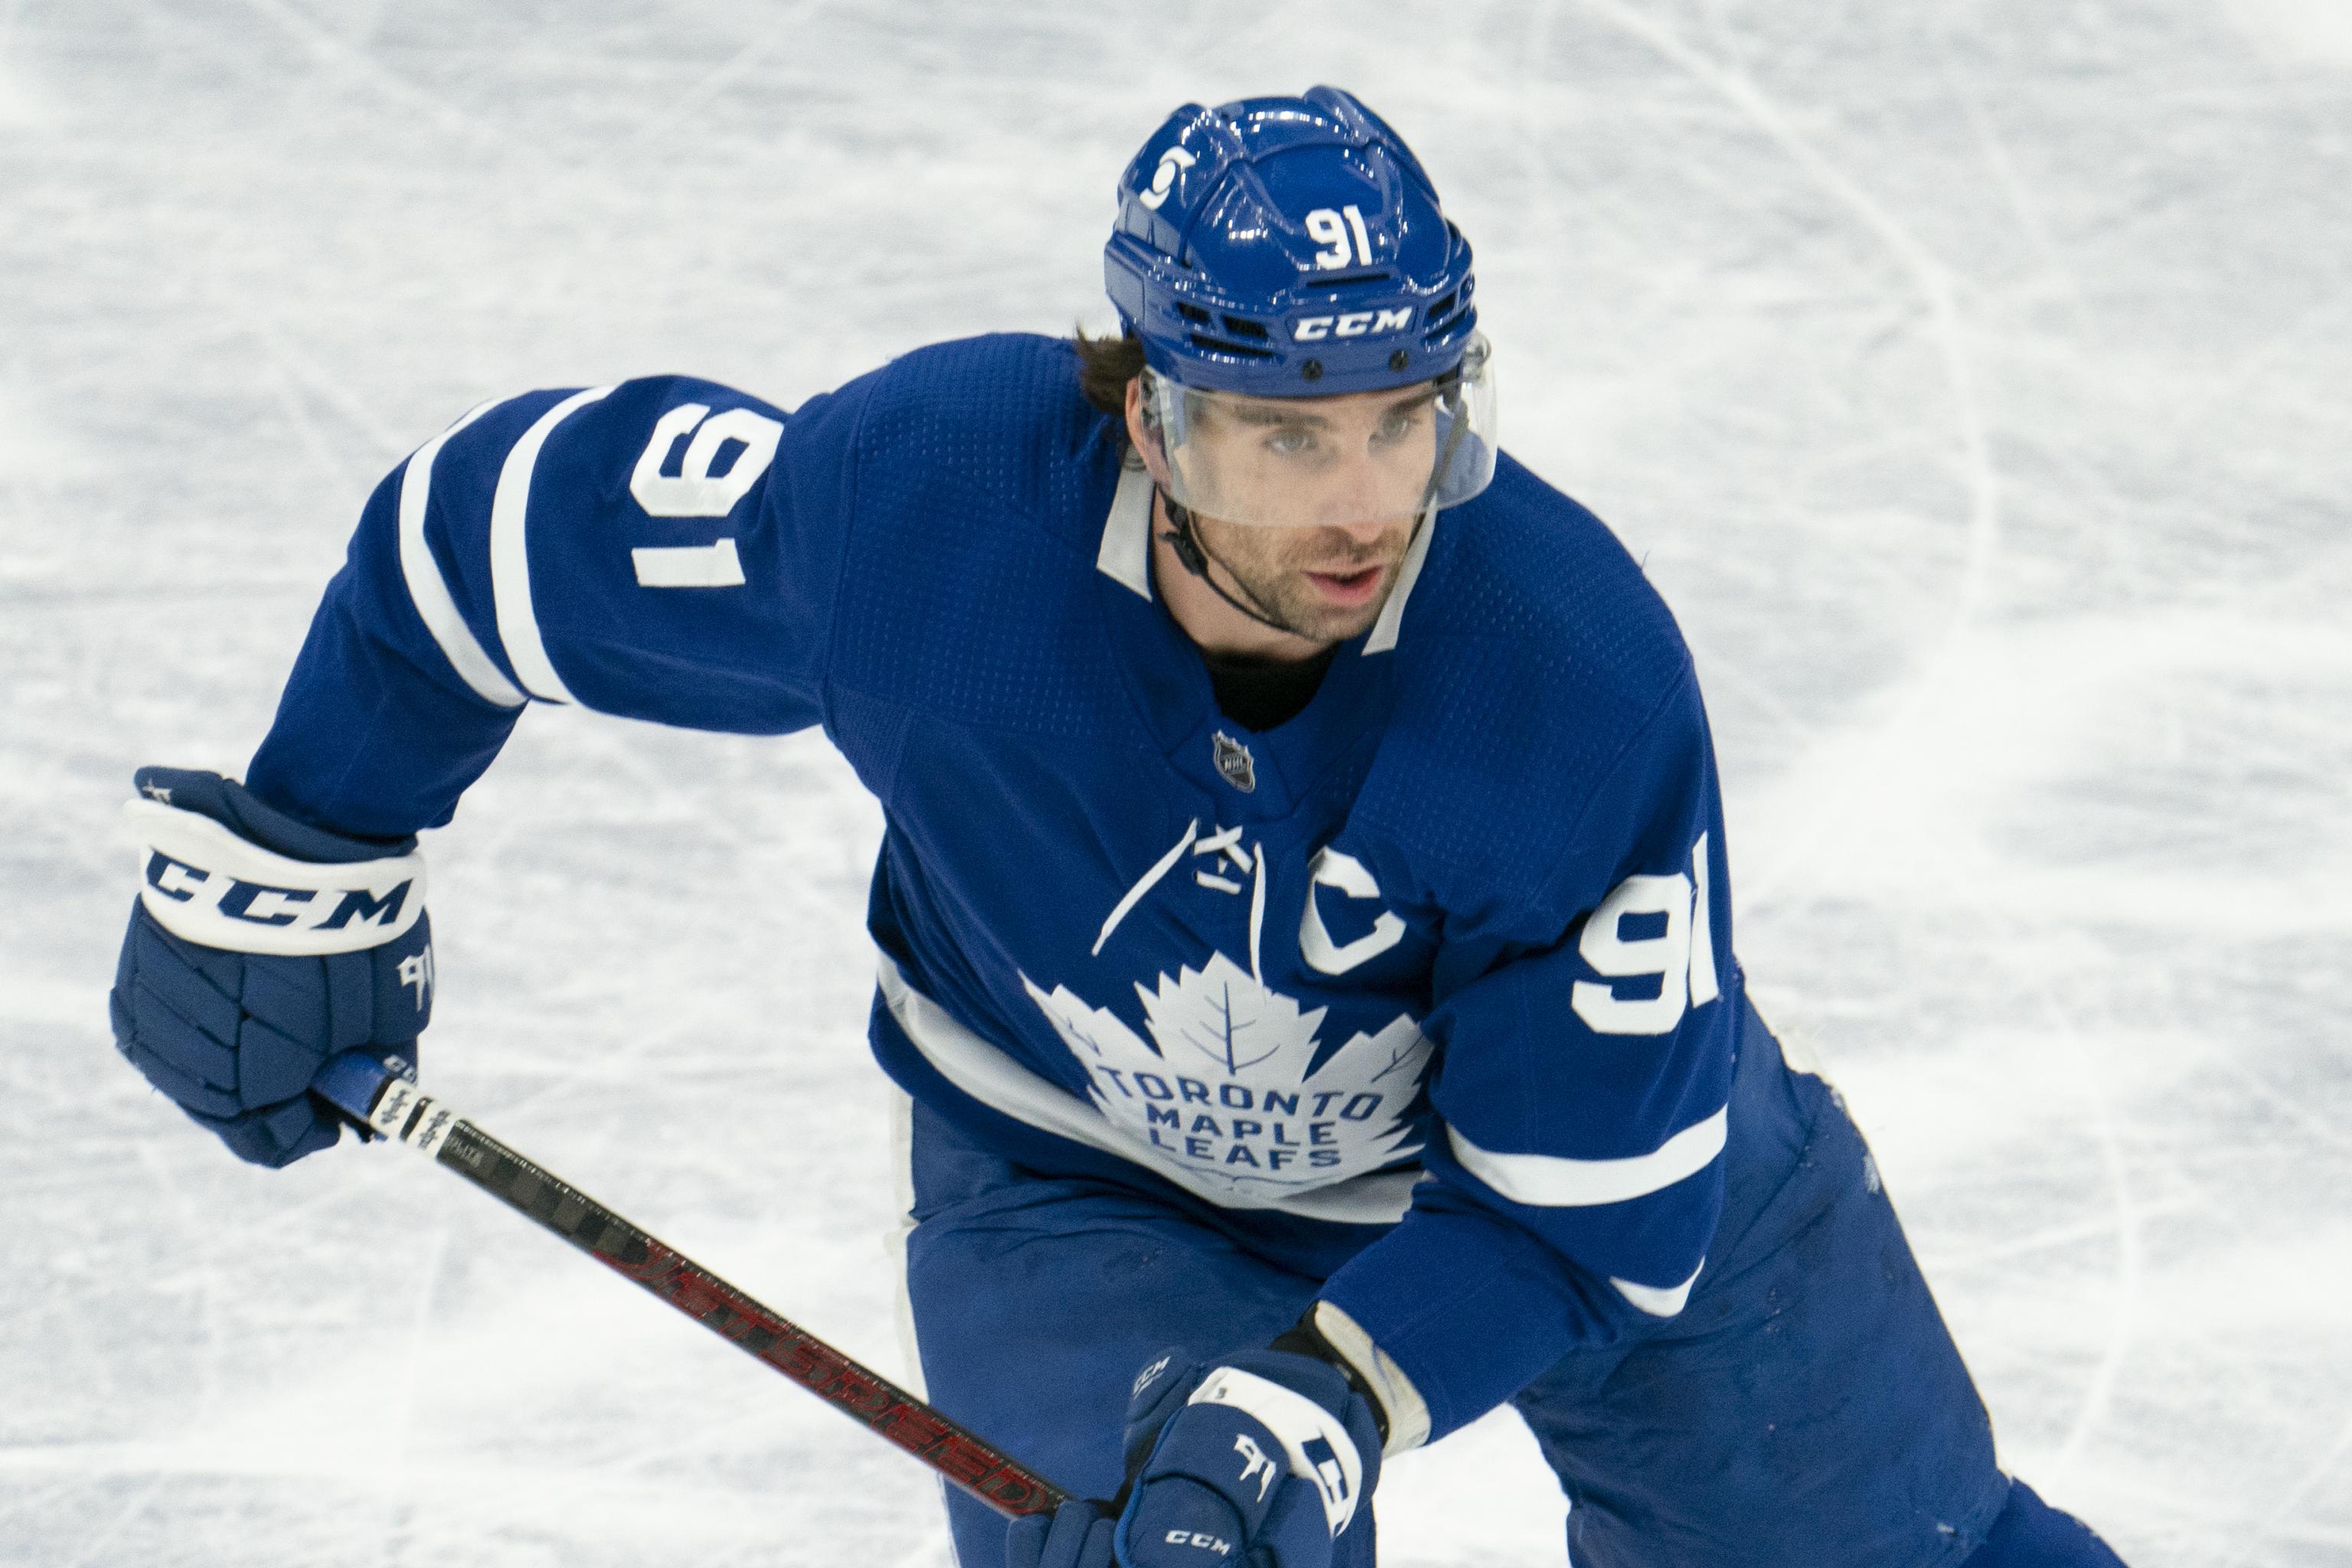 NHL: Toronto Maple Leafs captain John Tavares stretchered off ice